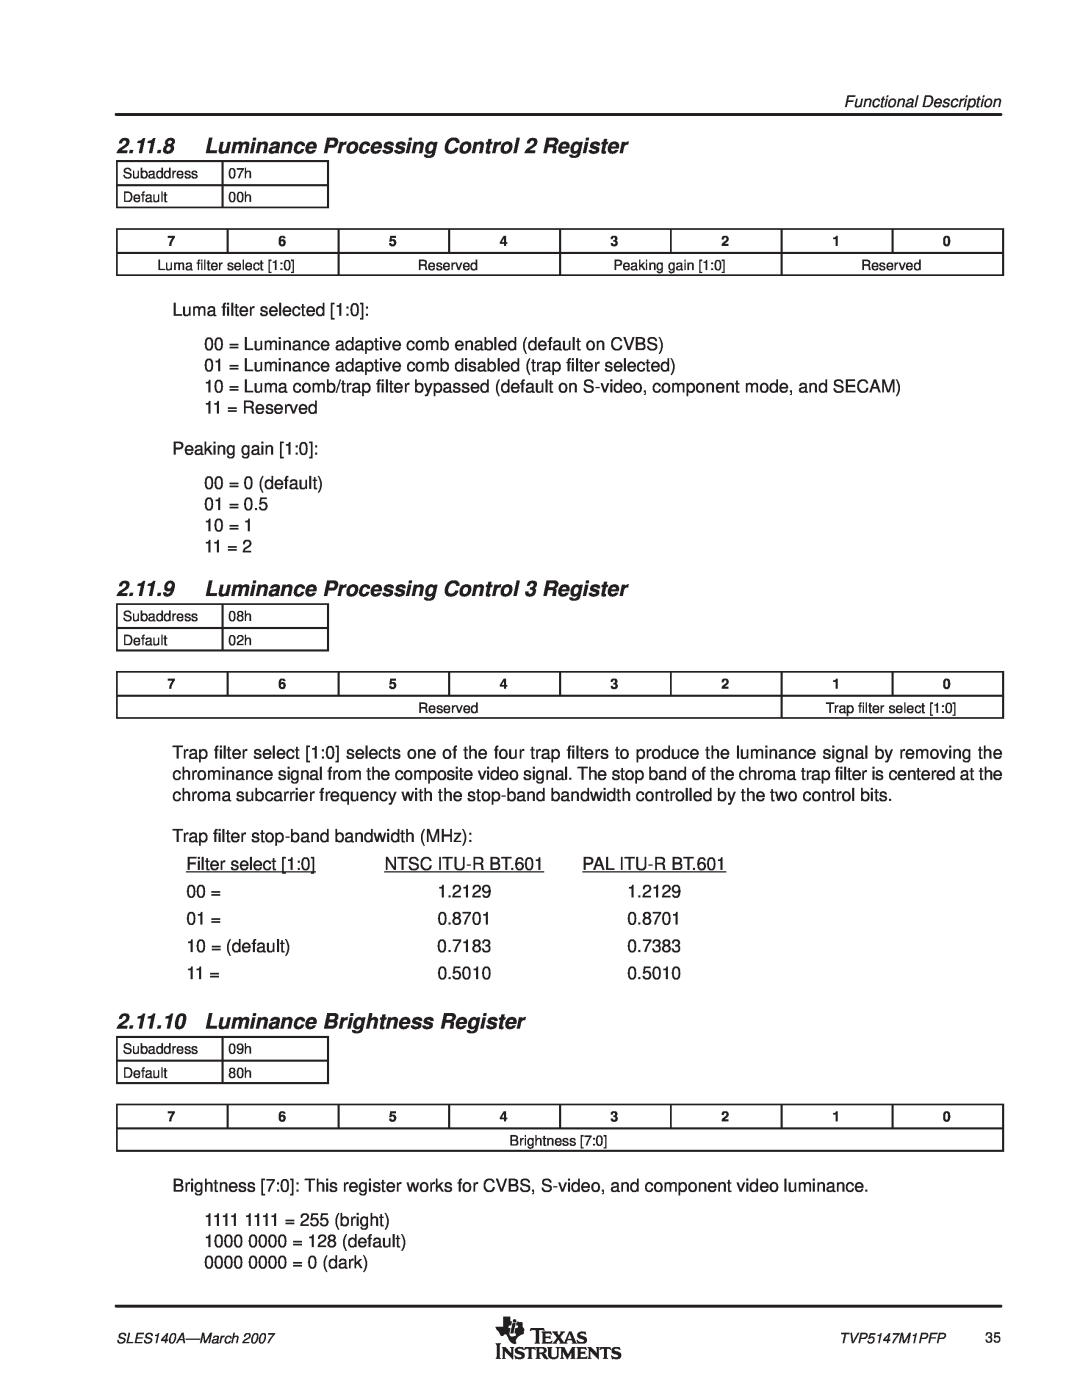 Texas Instruments TVP5147M1PFP Luminance Processing Control 2 Register, Luminance Processing Control 3 Register, 2.11.10 